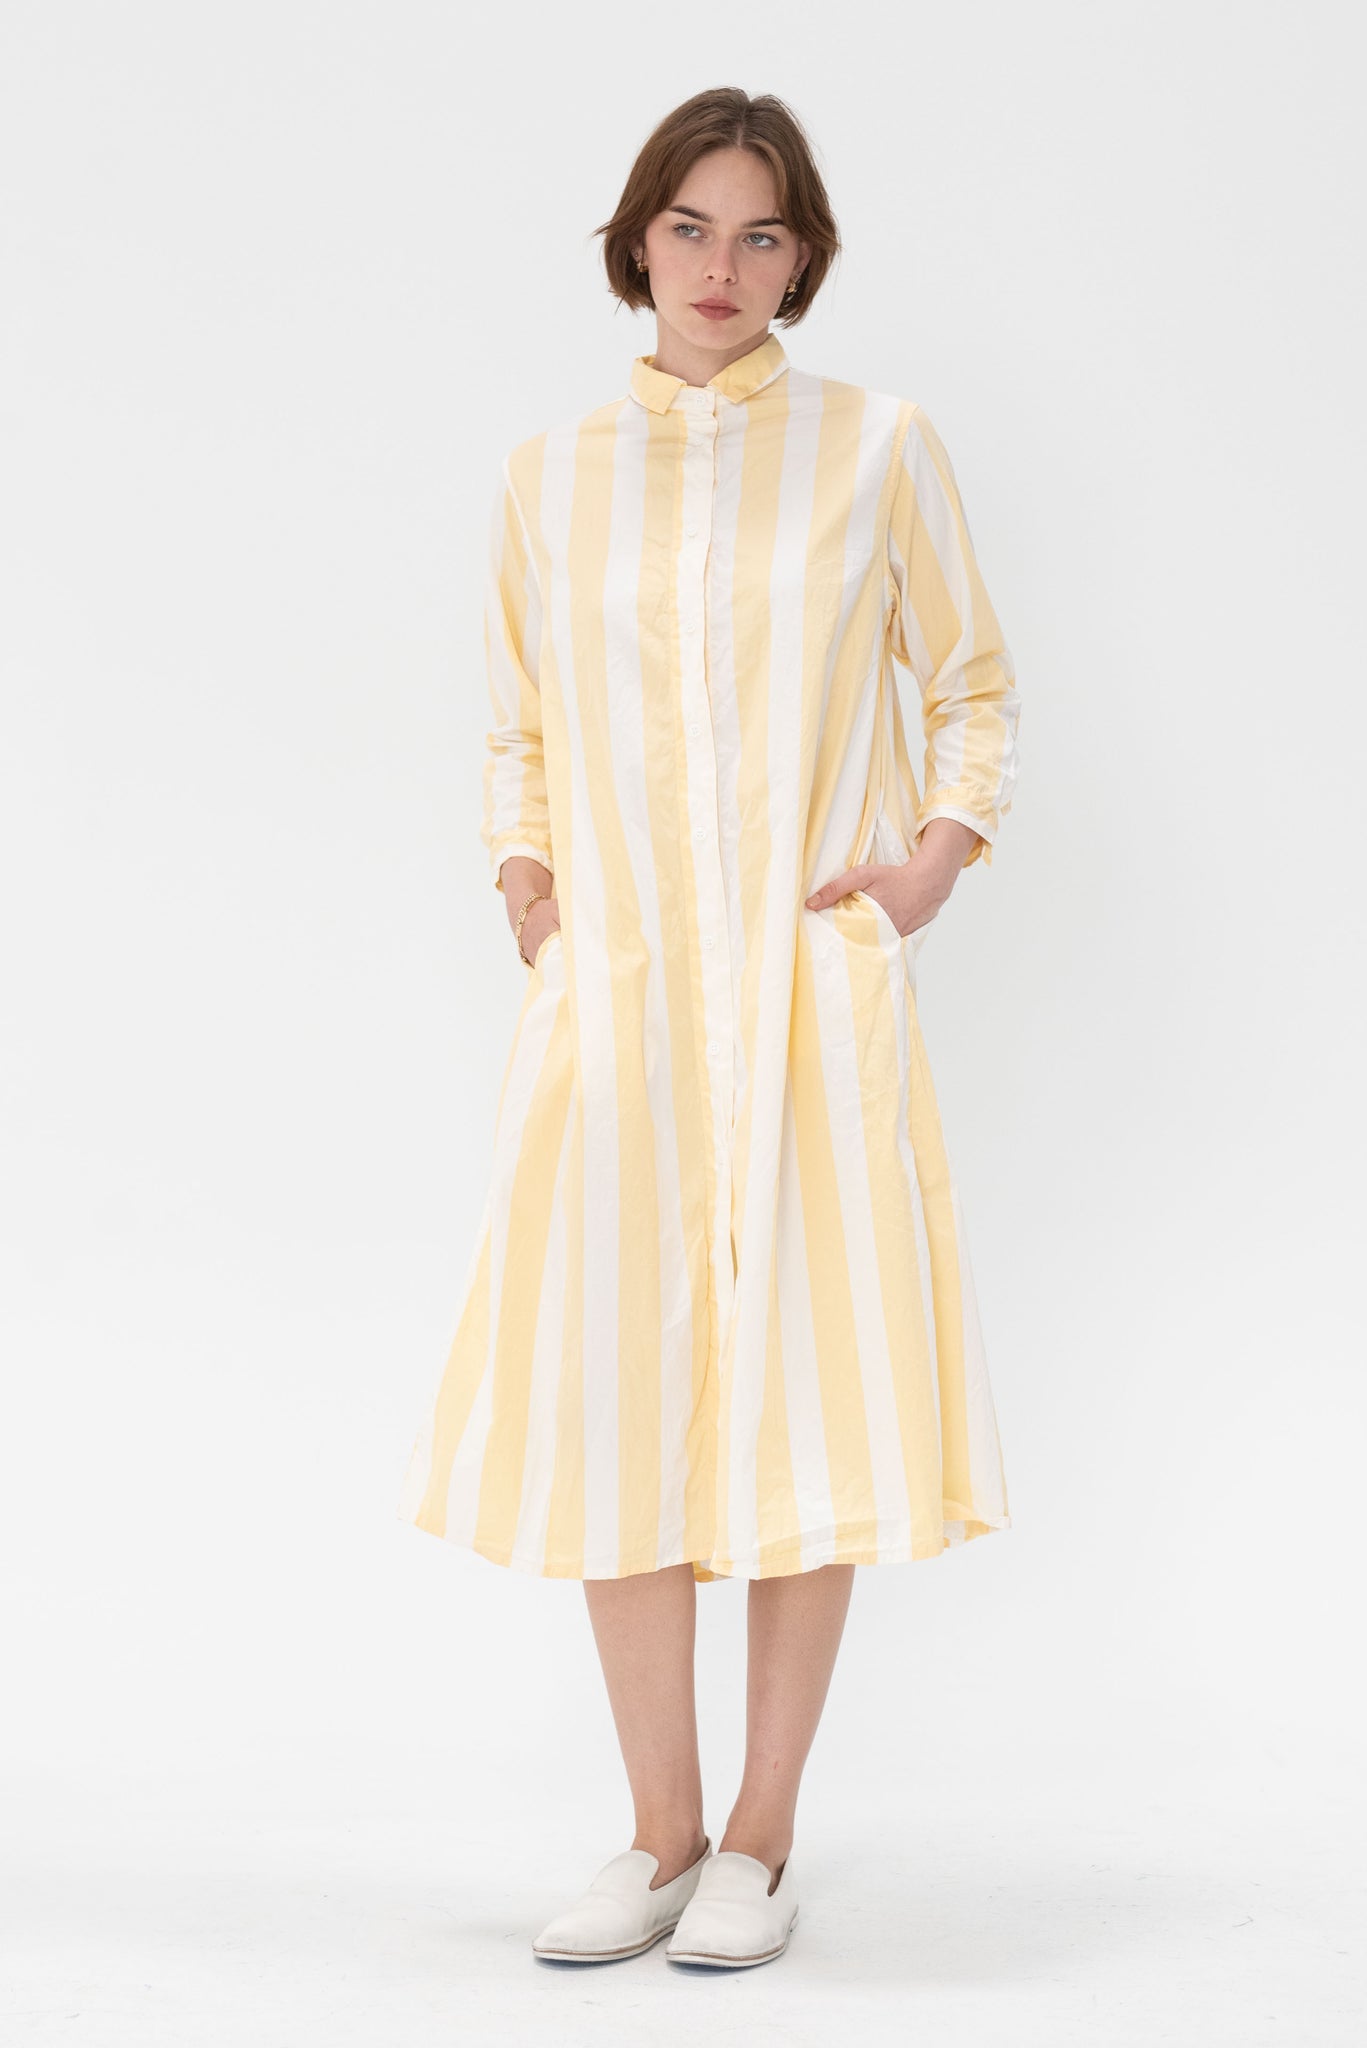 BERGFABEL - Shirt Dress, Big Yellow Stripe